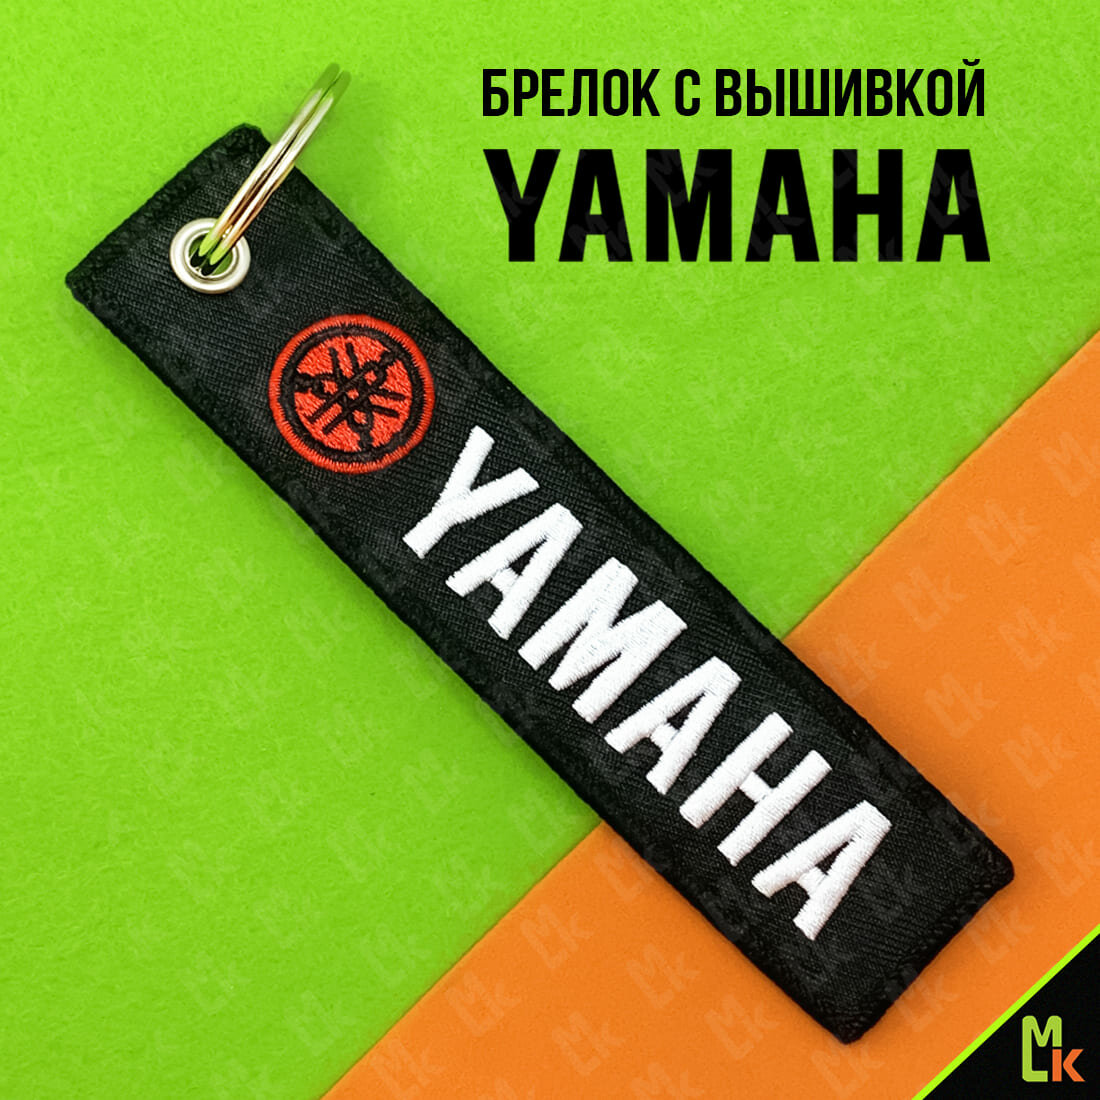 Тканевый брелок для авто мото портфеля ключей рюкзака сумки ремувка с вышивкой Yamaha Ямаха